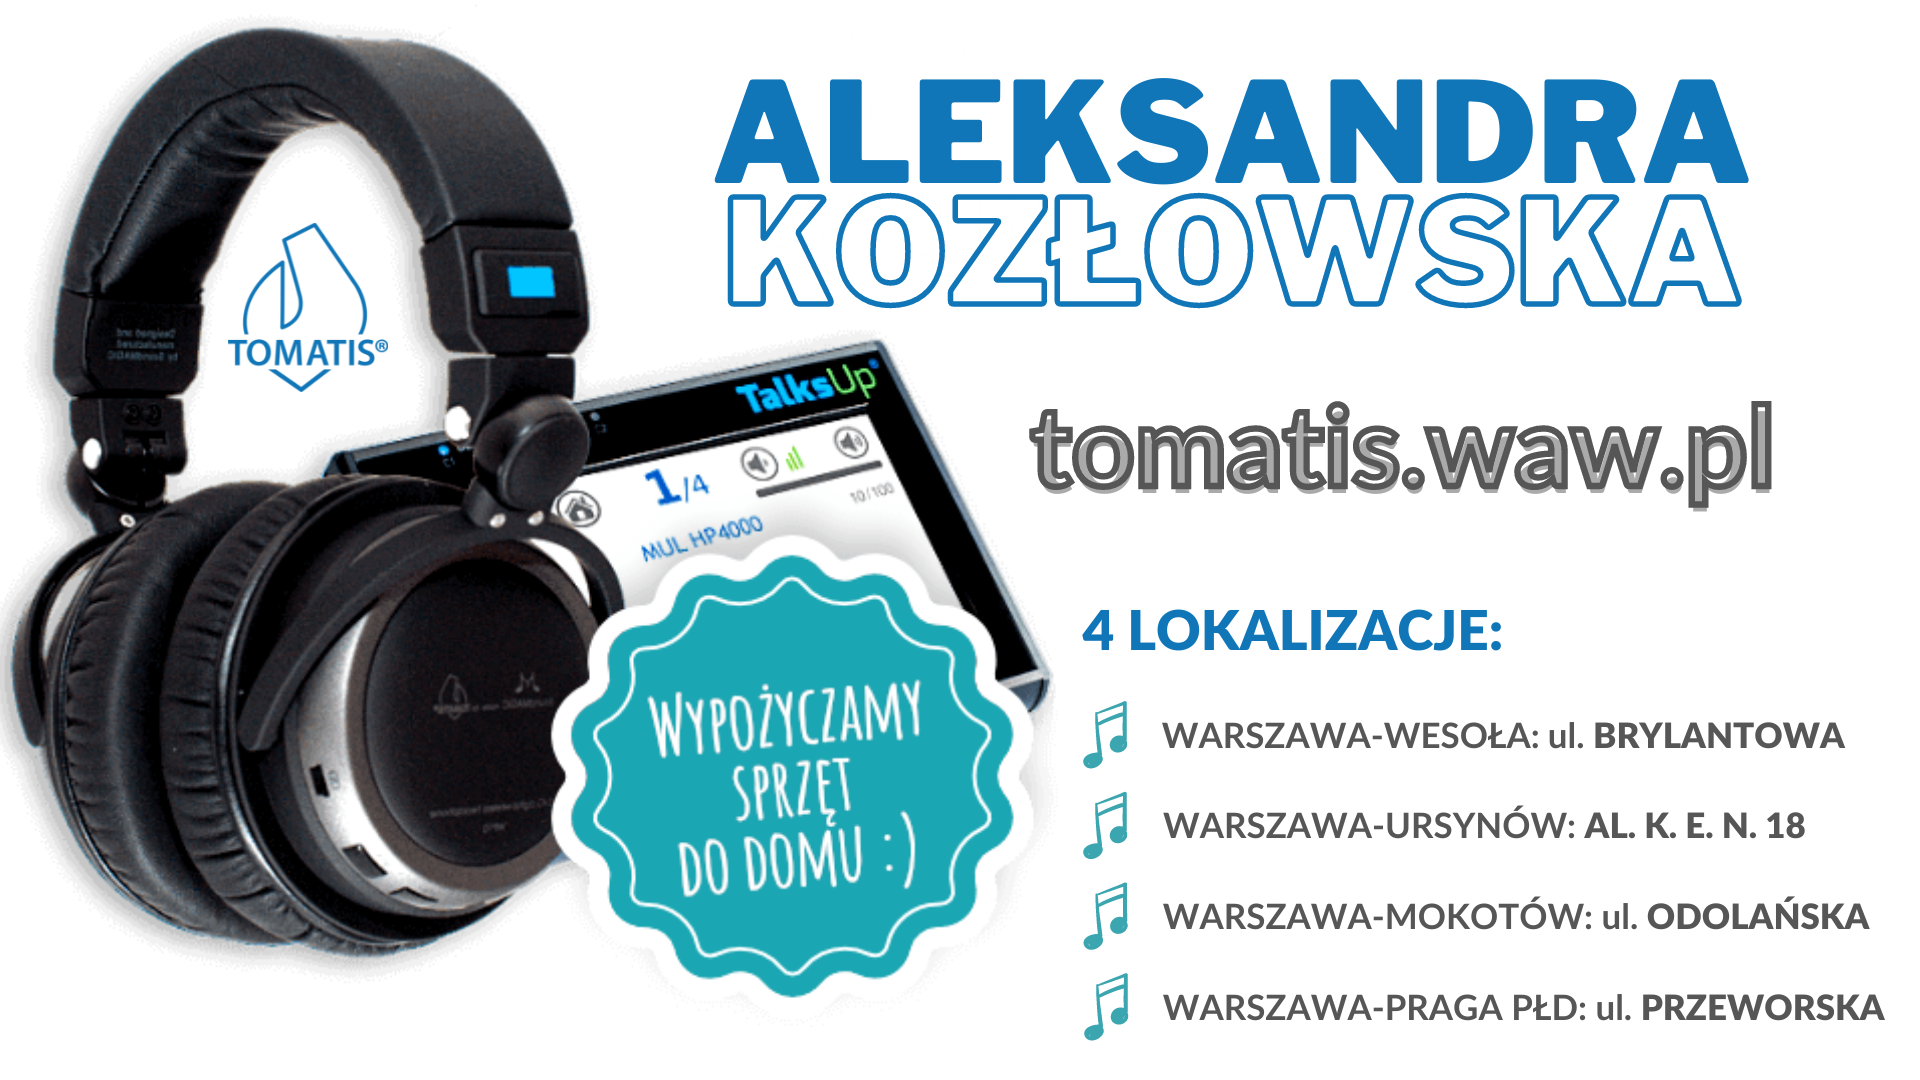 Aleksandra Kozlowska - Tomatis.waw.pl